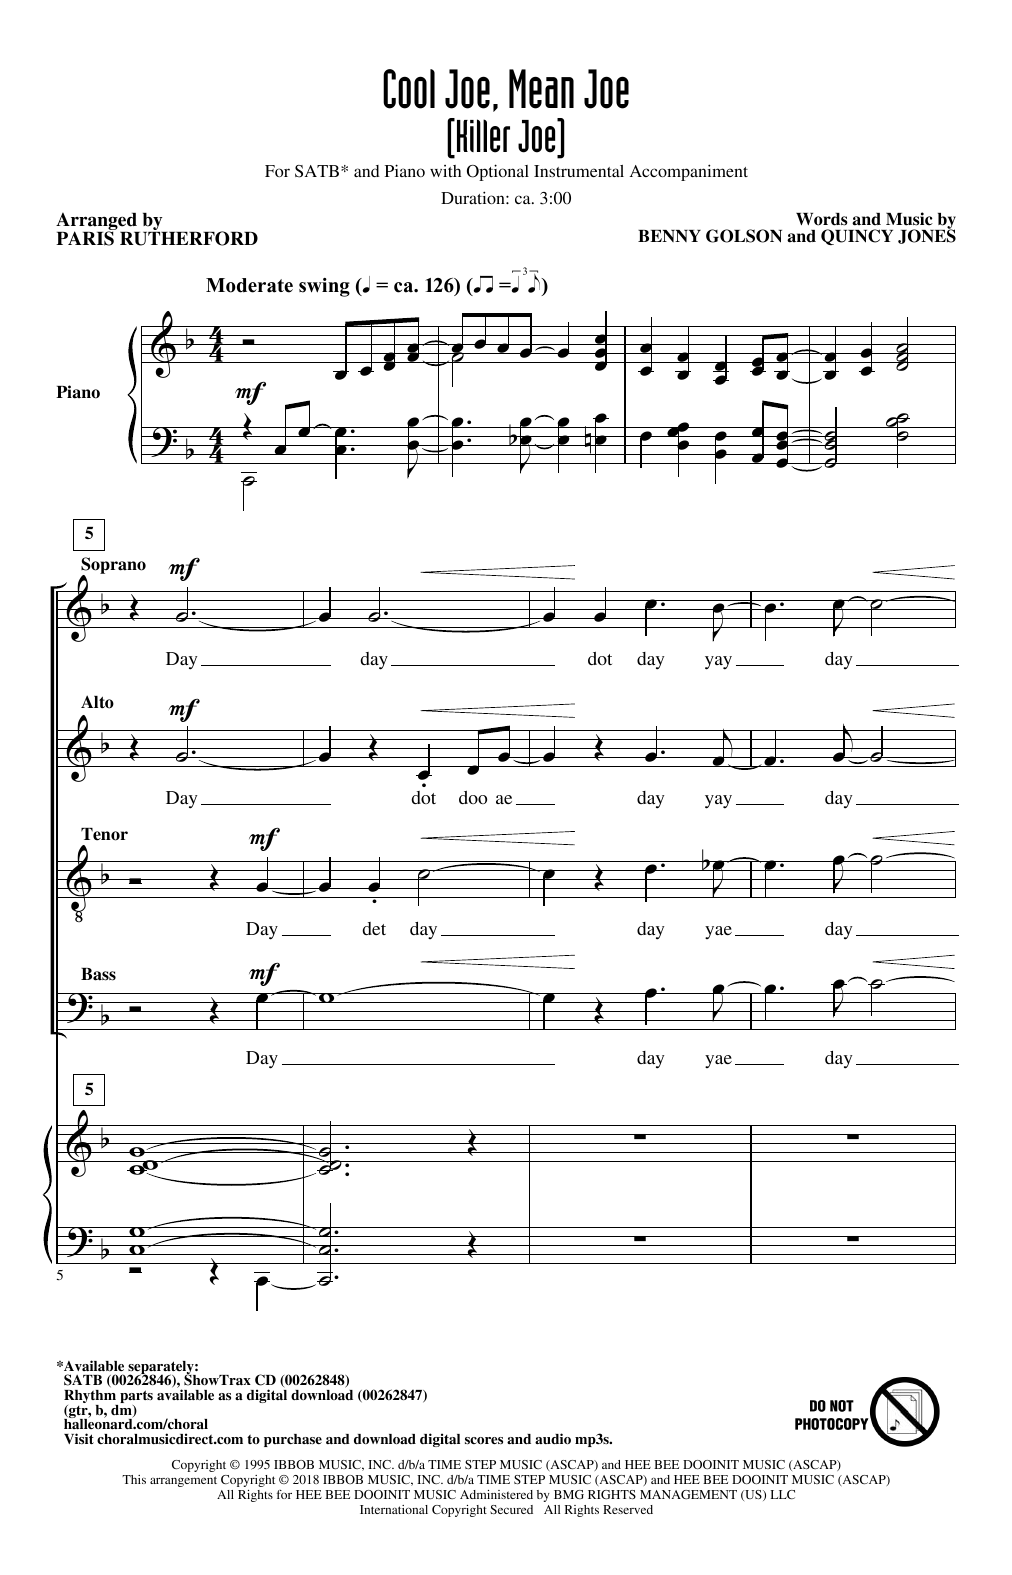 Download Paris Rutherford Cool Joe, Mean Joe (Killer Joe) Sheet Music and learn how to play SATB Choir PDF digital score in minutes